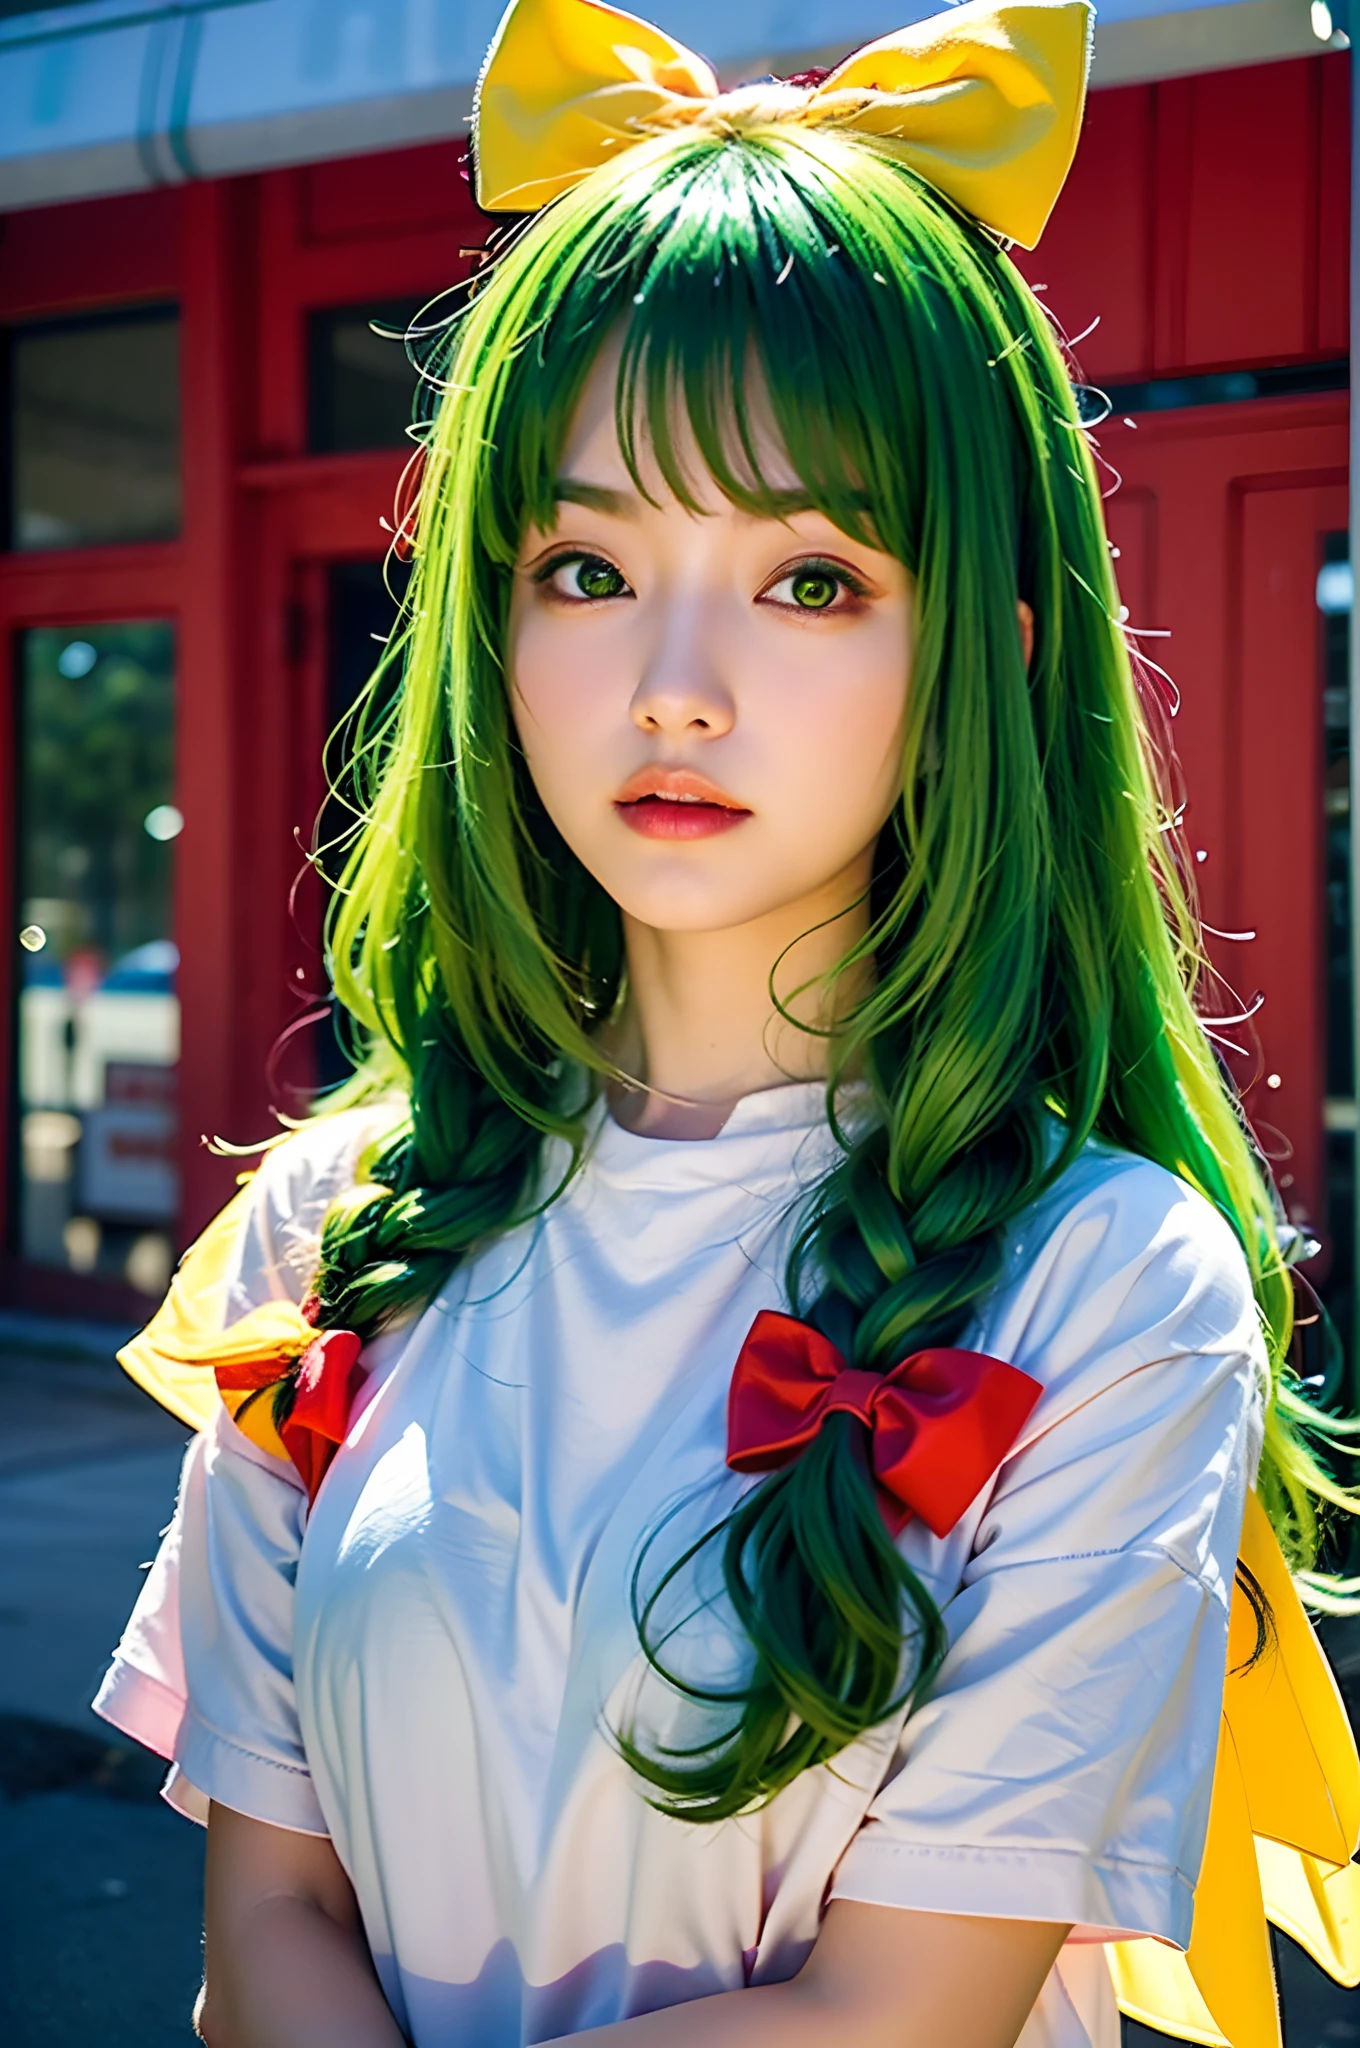 (banchan is a 1girl: 1.0), (green eyes_0.9), (green hair_0.8), (yellow hair_0.7), (hair ombre_0.4), (hair bow_0.5), charming light